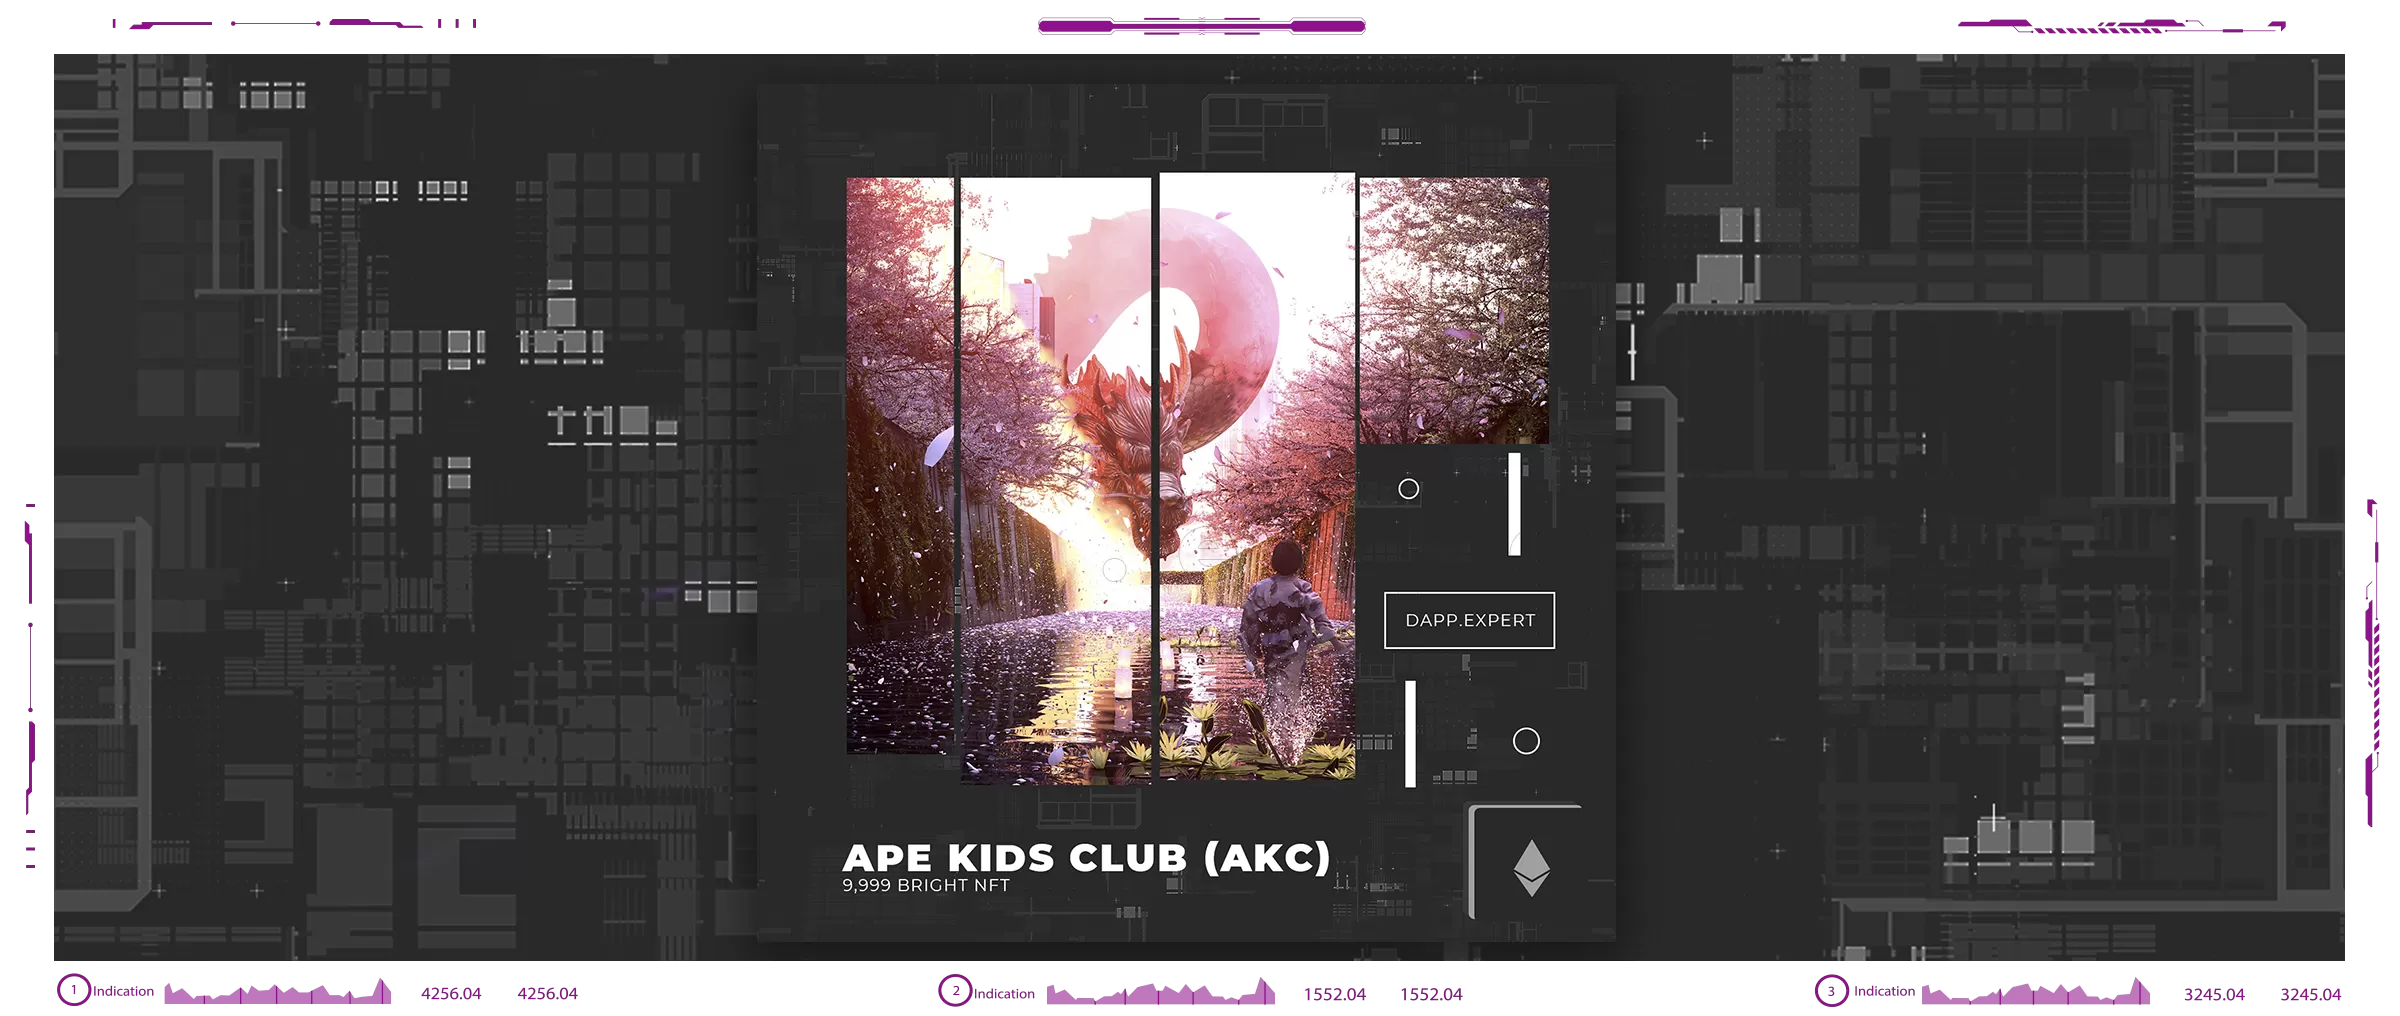 Dapps Ape Kids Club (AKC)